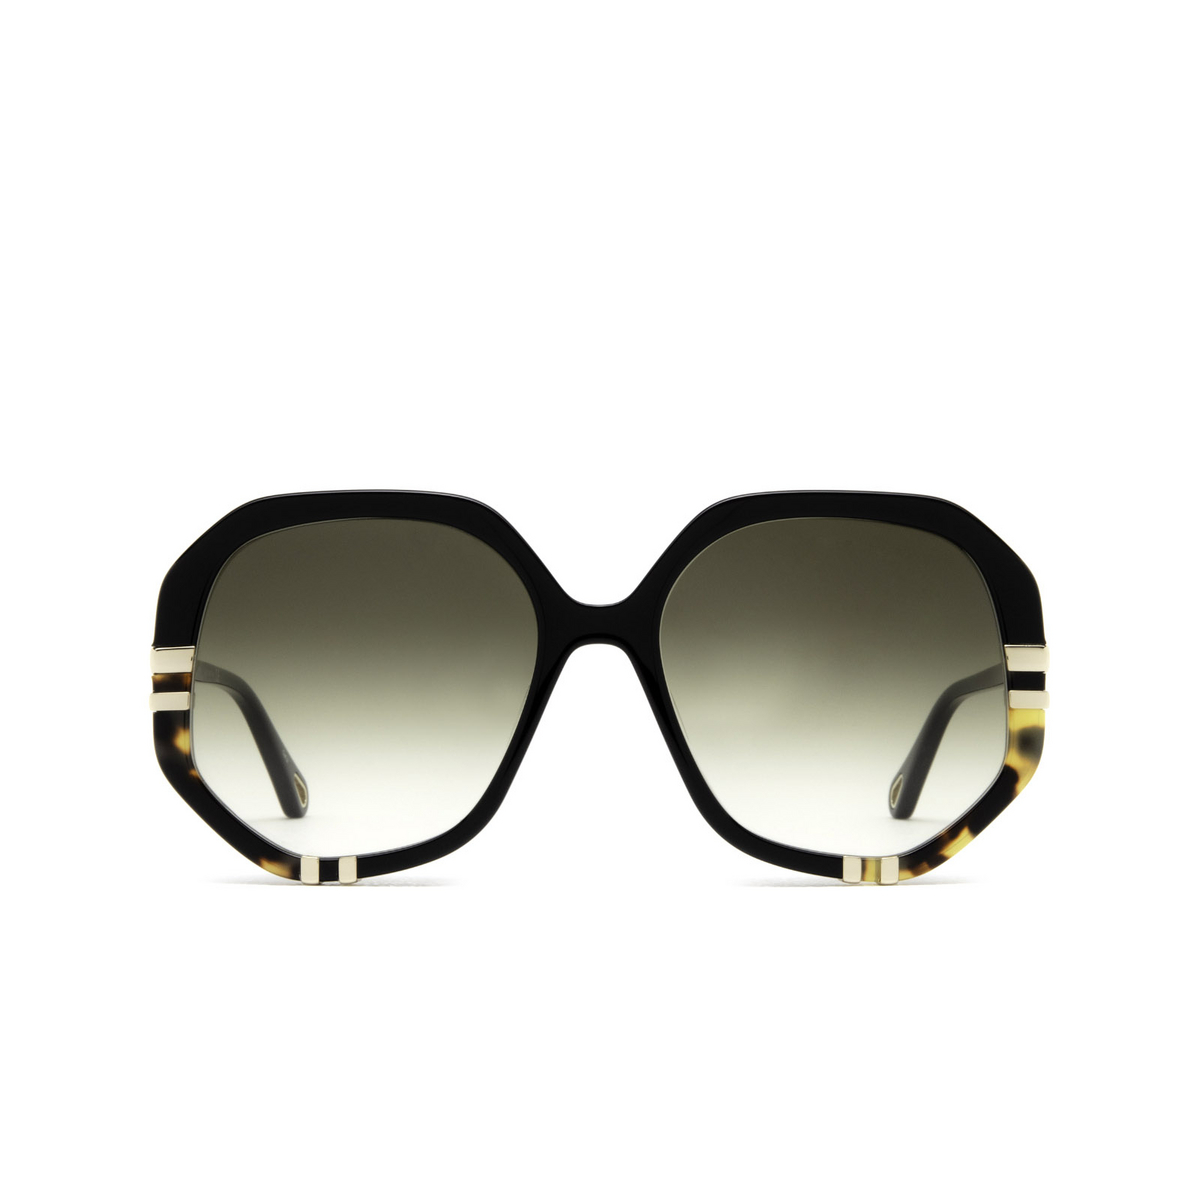 Chloé® Irregular Sunglasses: West CH0105S color Black 002 - front view.